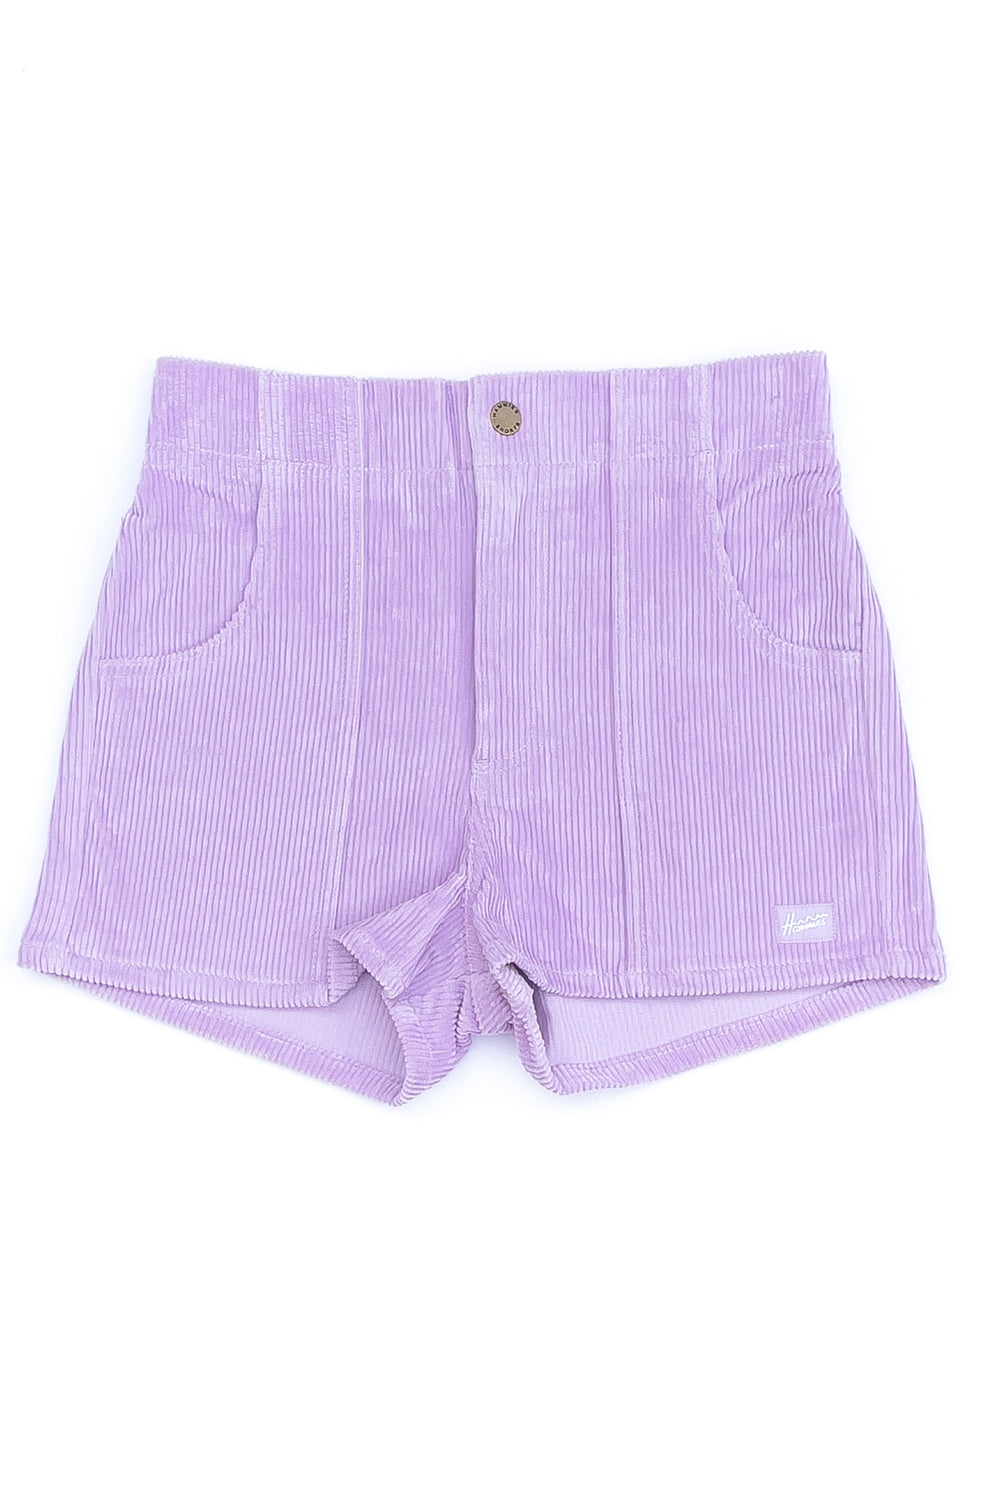 Powder Purple Hammies Shorts